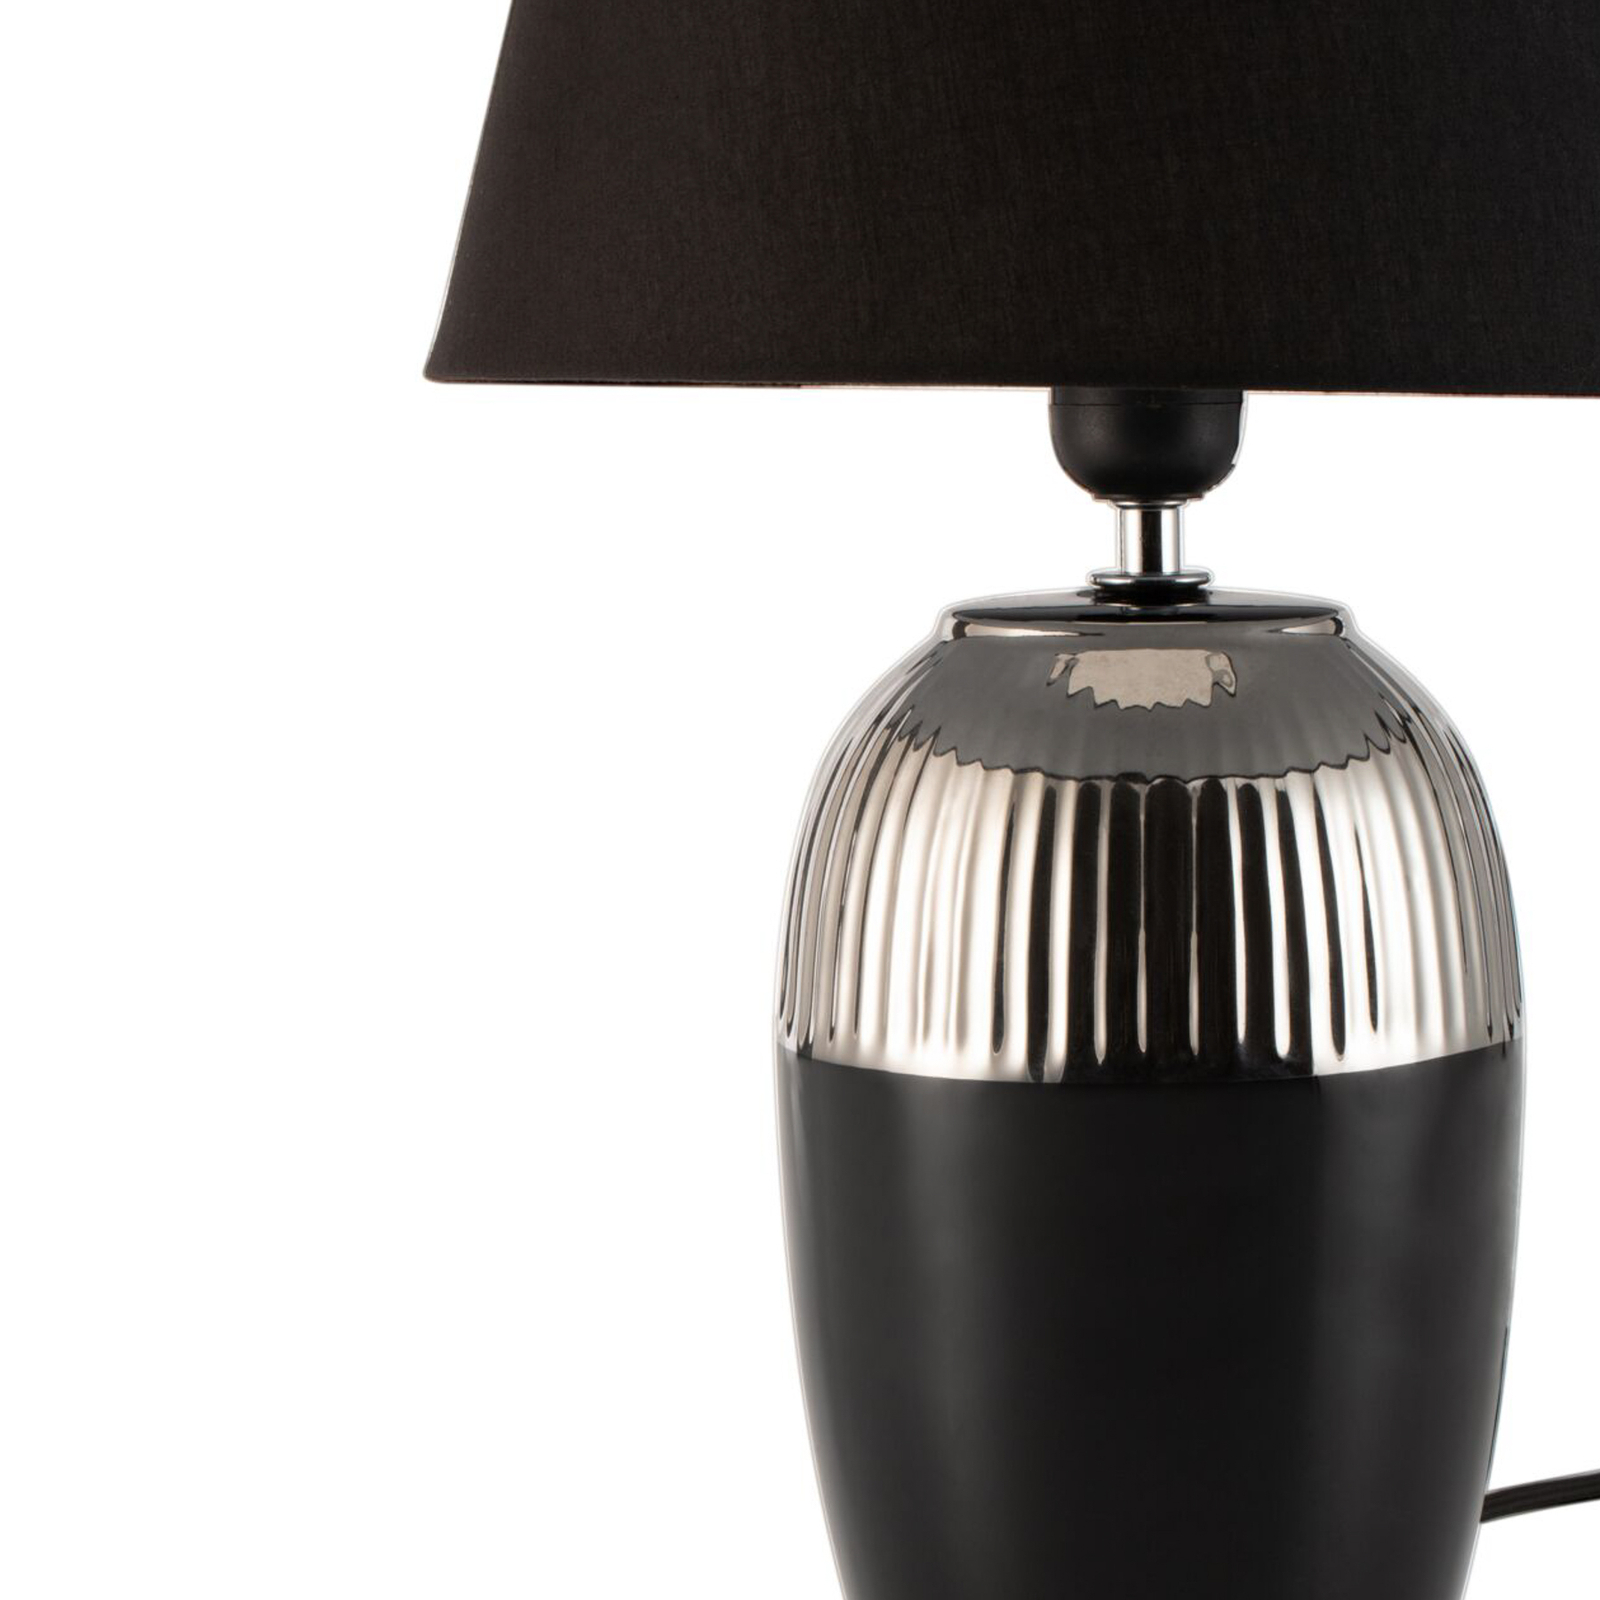 Pauleen Midnight Beauty table lamp black/silver